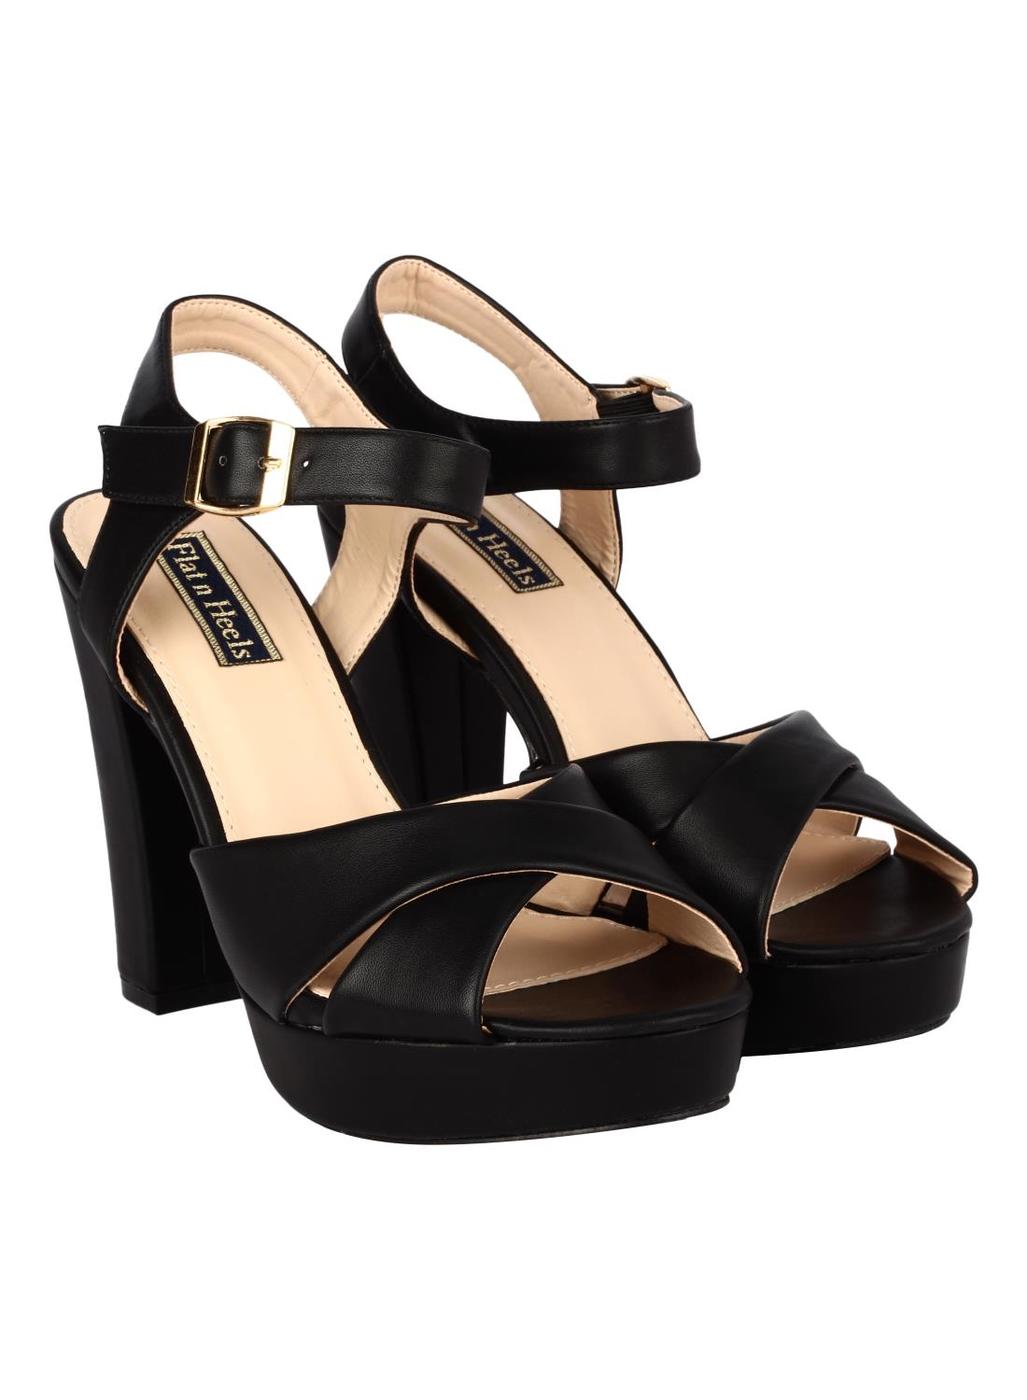 sandals heels online shopping